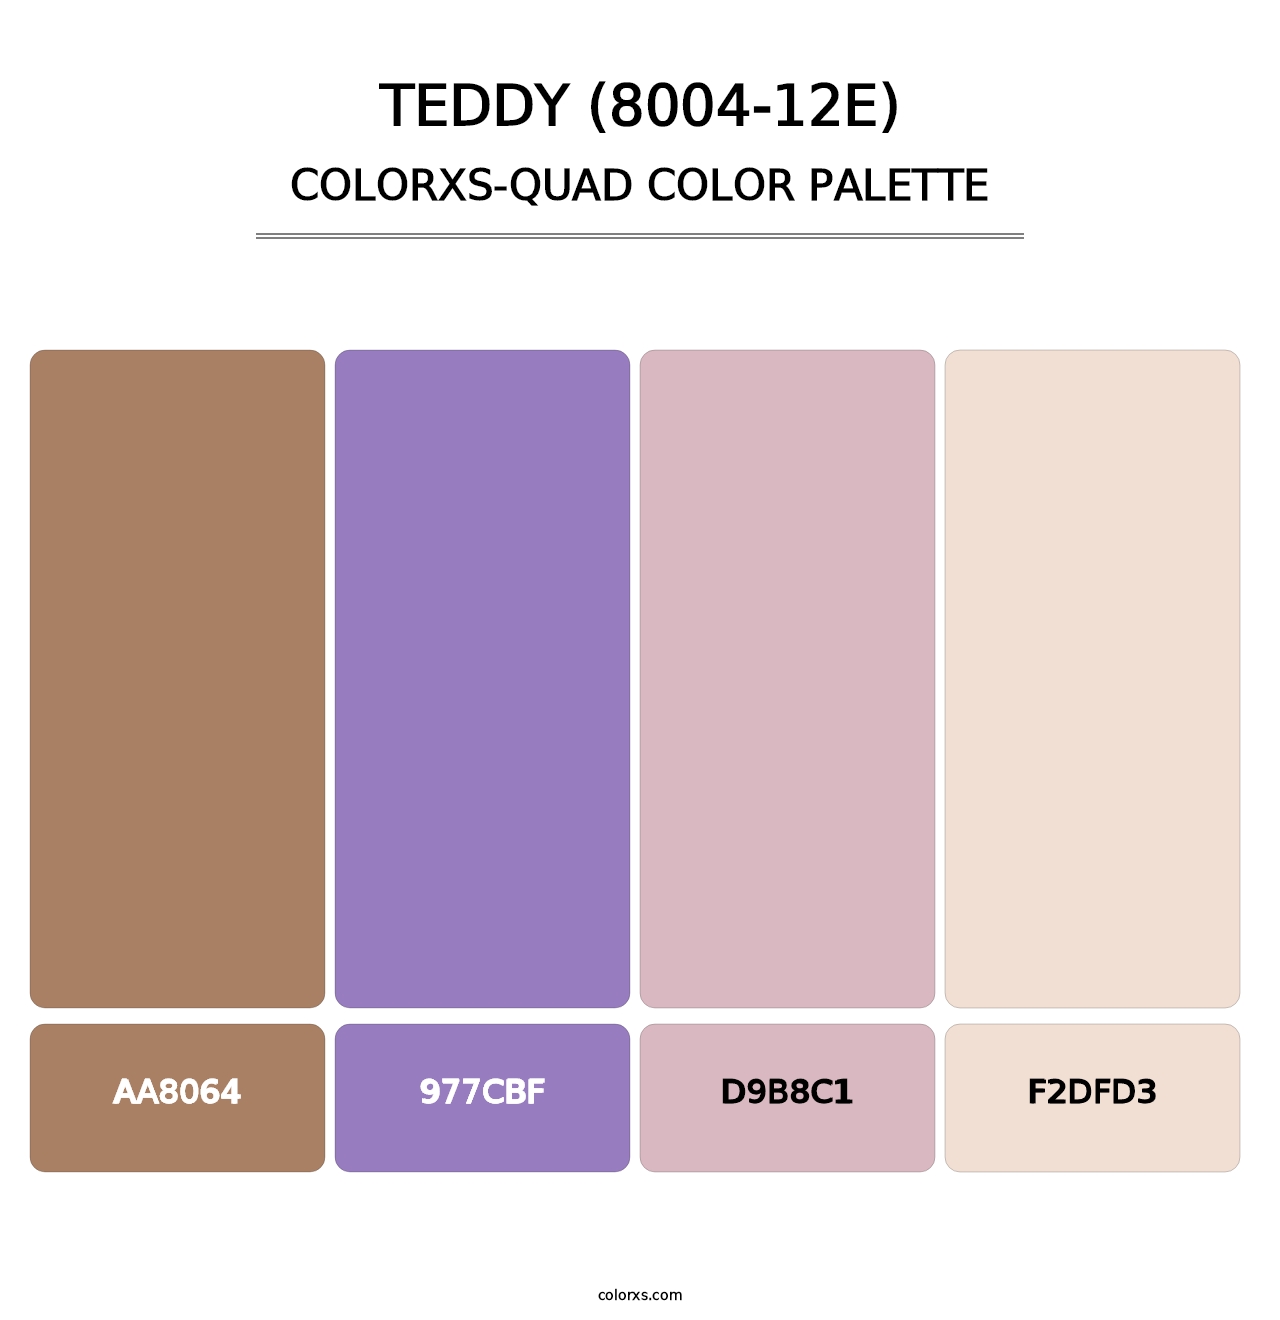 Teddy (8004-12E) - Colorxs Quad Palette